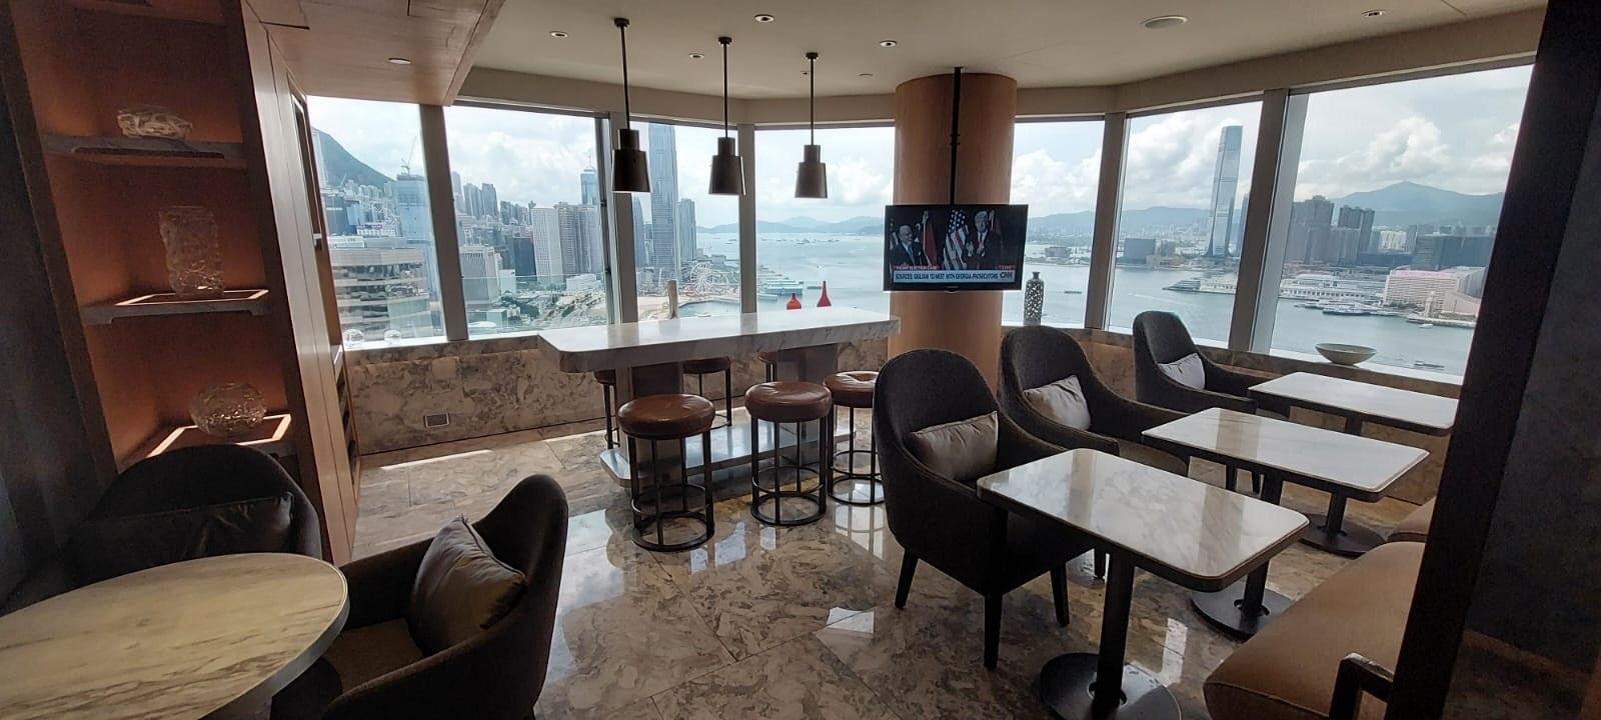 Renaissance Hong Kong Harbour View Hotel Executive Club Lounge